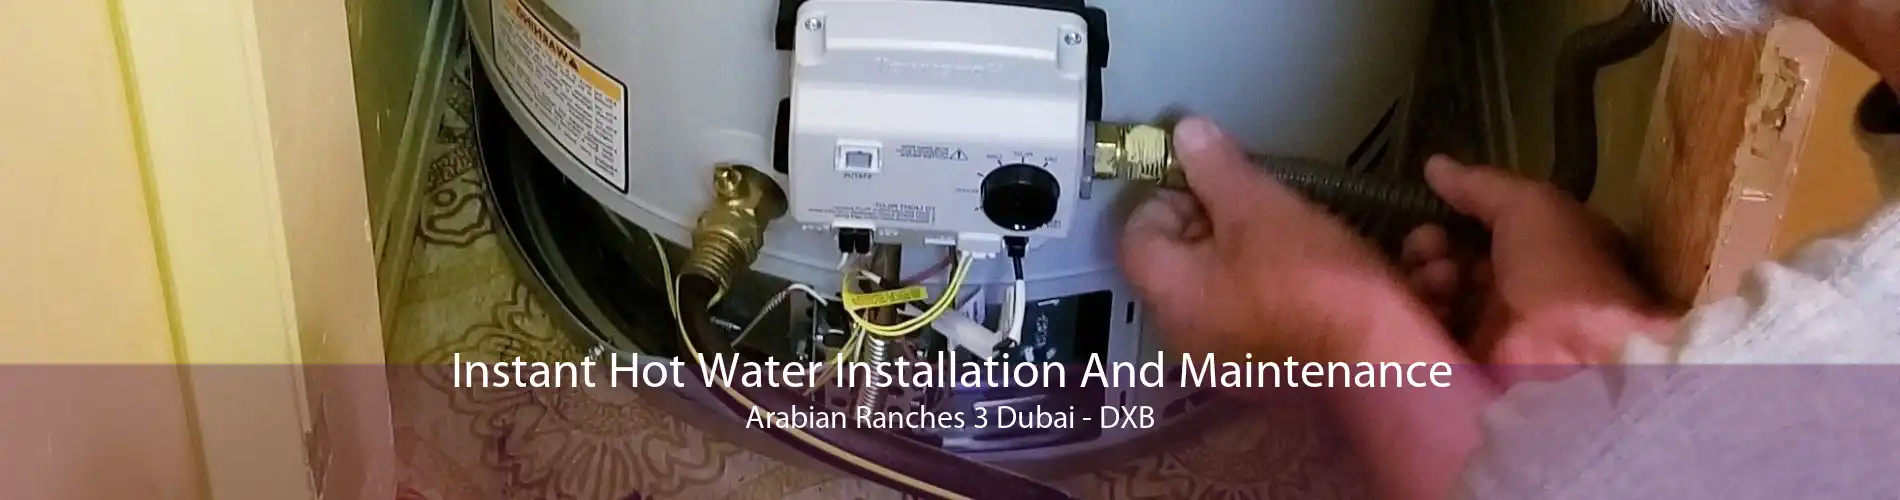 Instant Hot Water Installation And Maintenance Arabian Ranches 3 Dubai - DXB